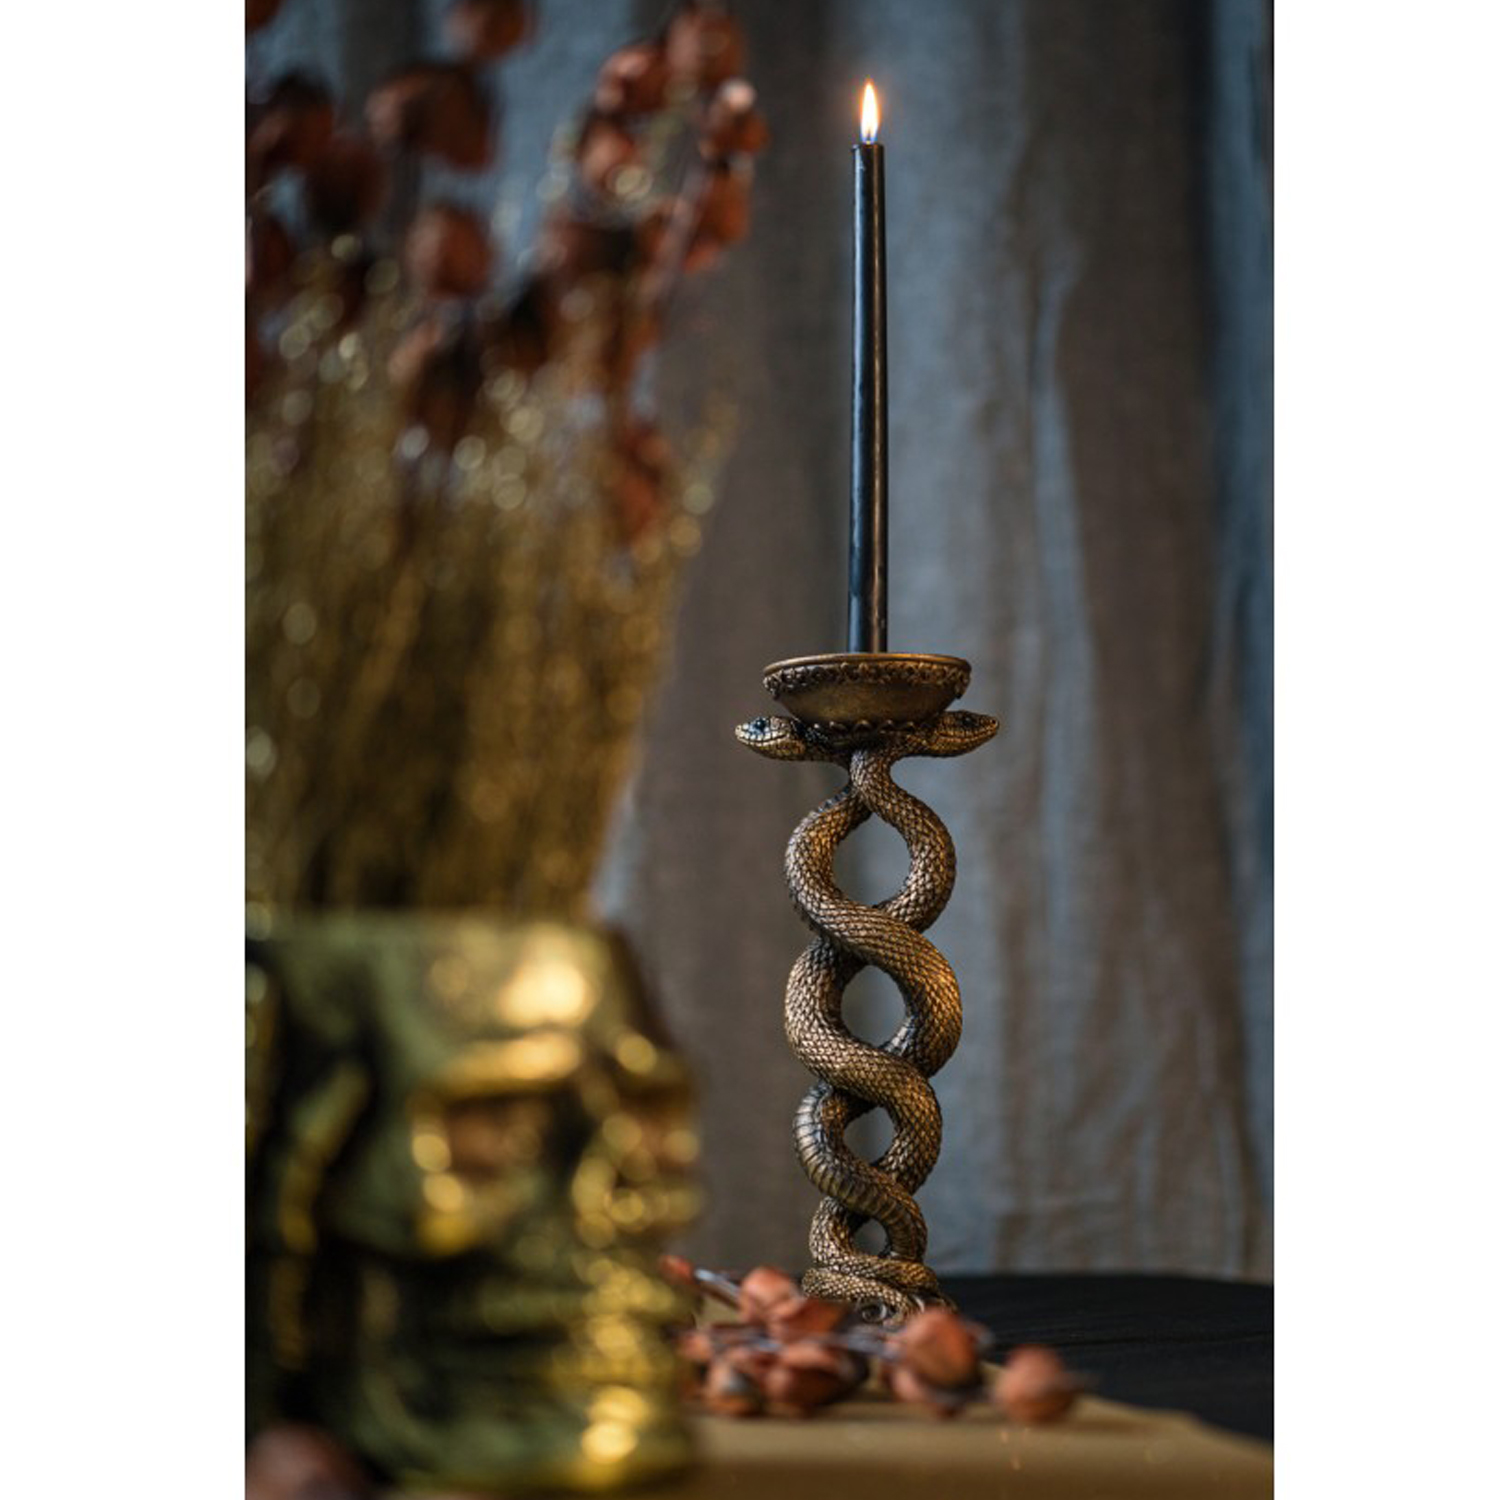 NEU Schlangen-Kerzenhalter in Bronzeoptik aus Polyresin, Gre ca. 11 cm x 12 cm x 31 cm Bild 2